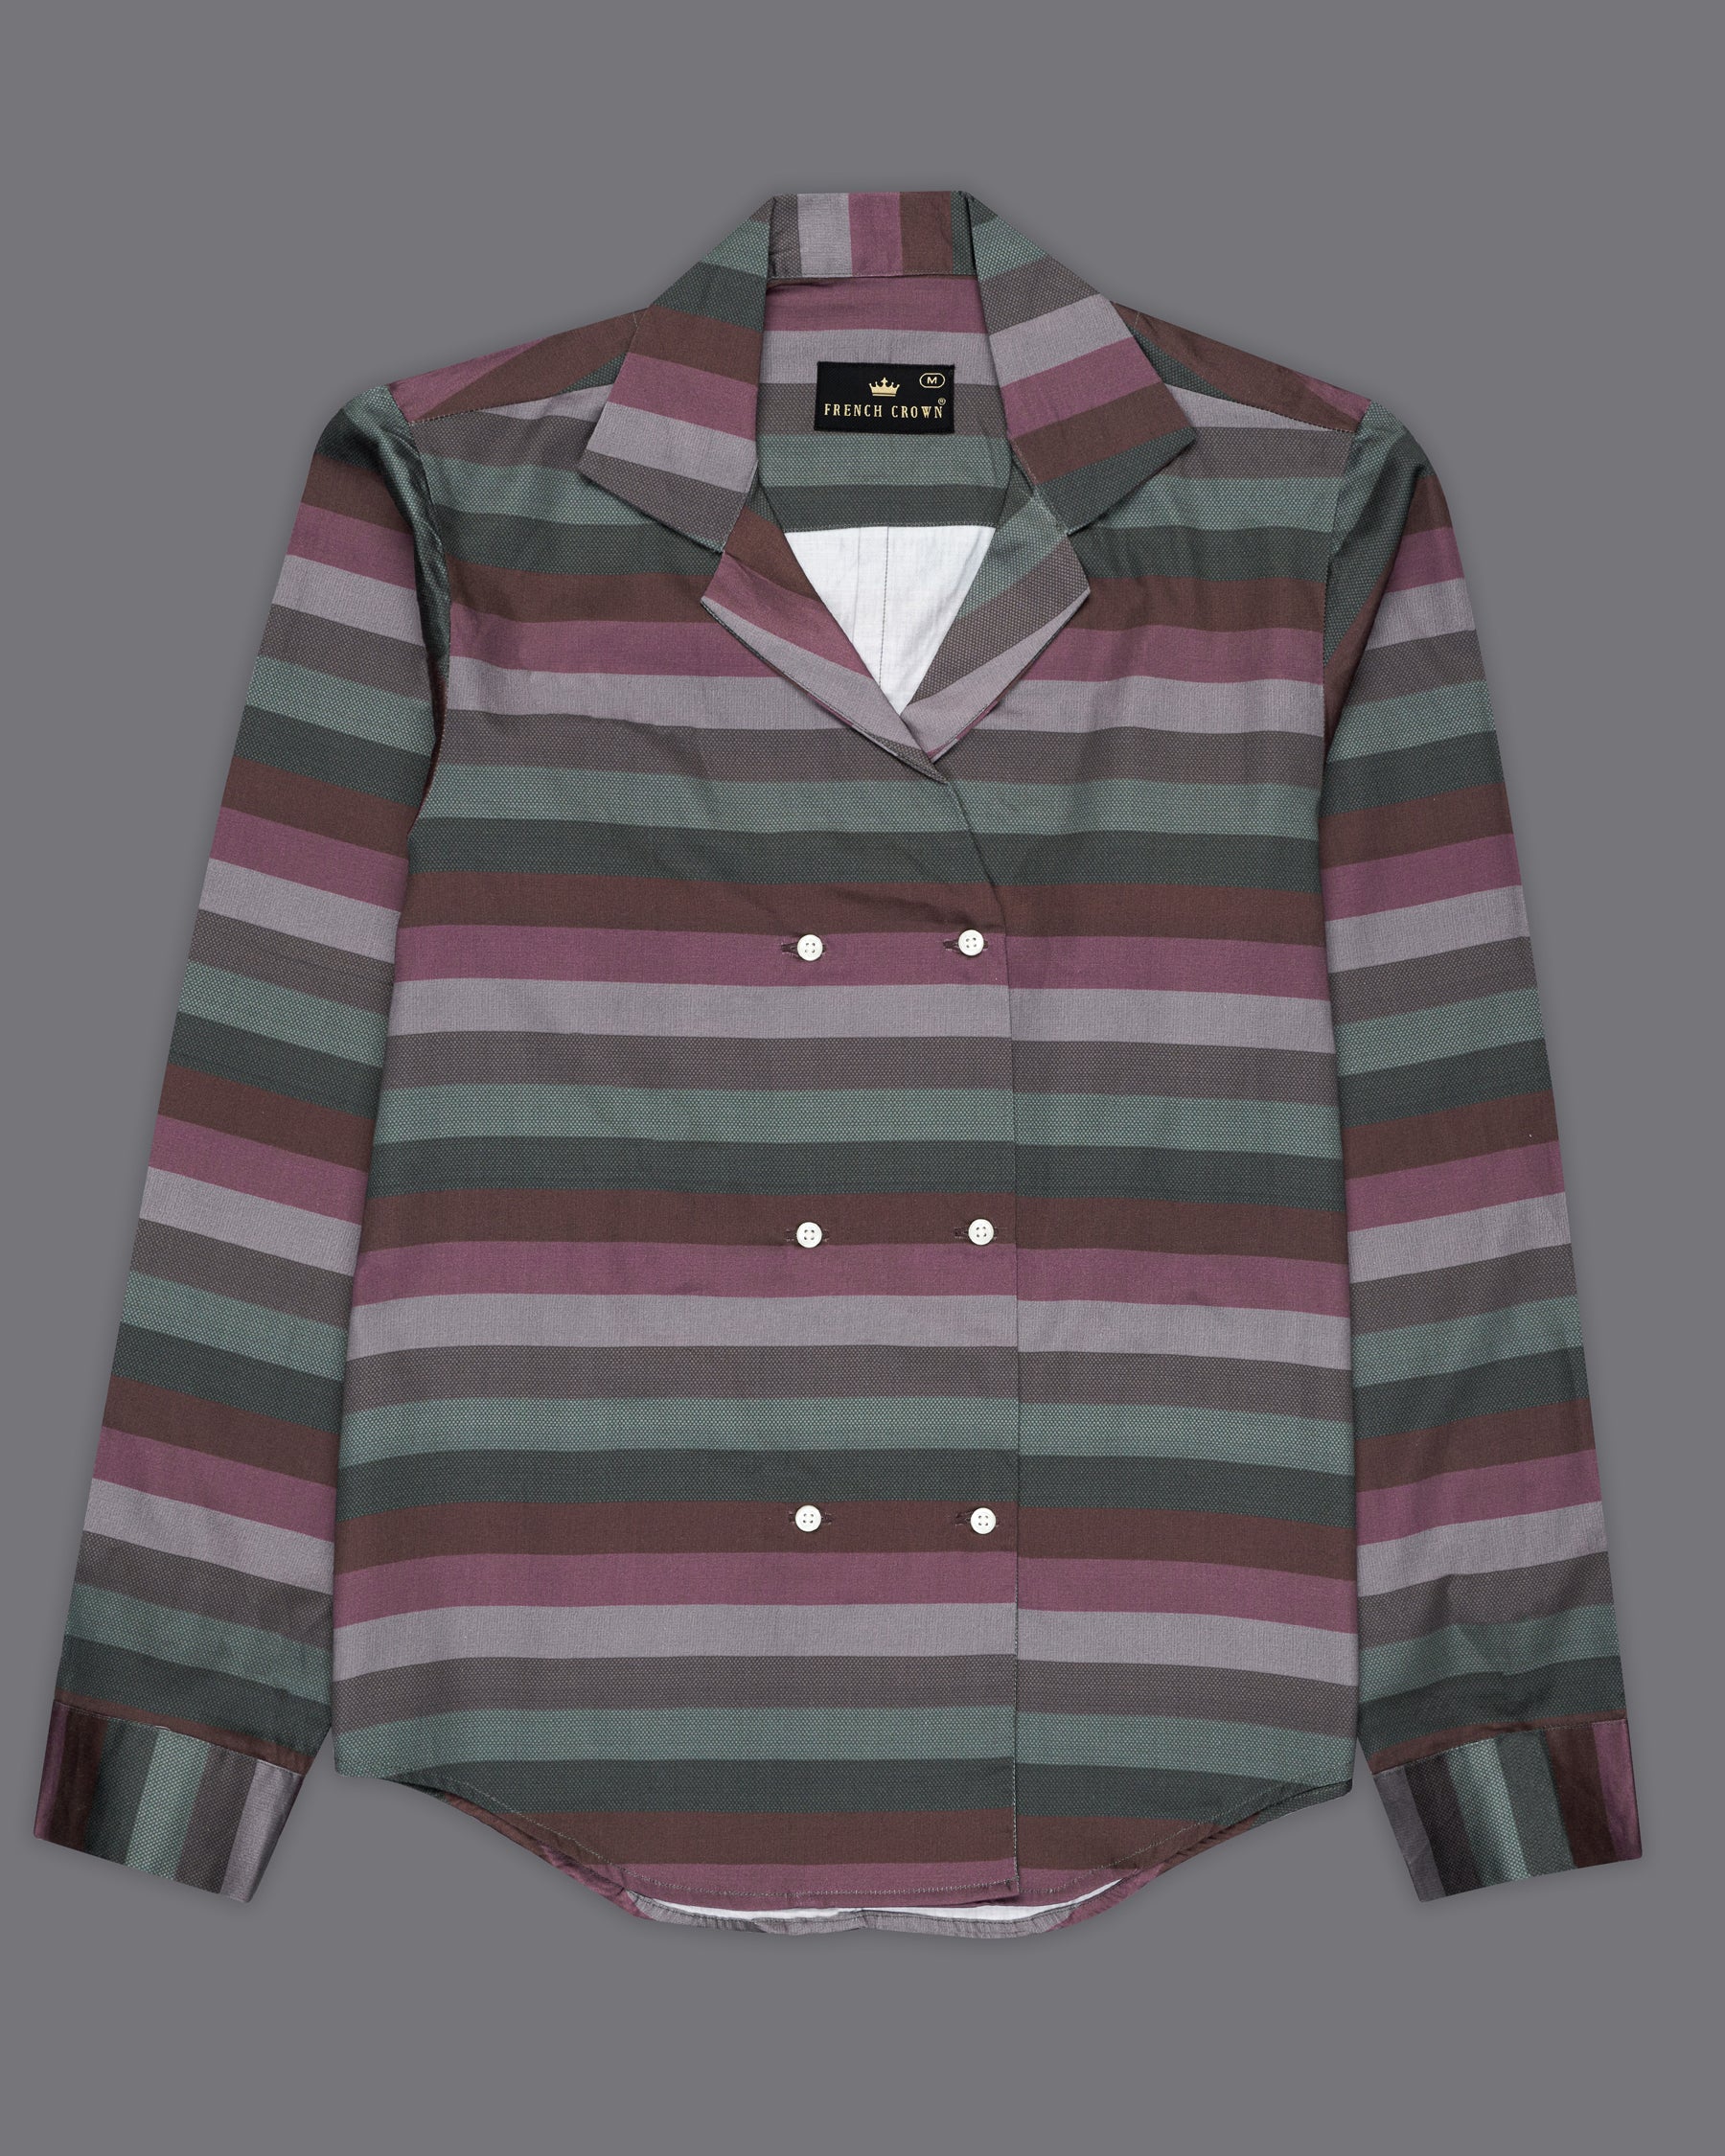 Matterhorn Brown with Multicolour Striped Super Soft Premium Cotton Women’s Shirt WS062-32, WS062-34, WS062-36, WS062-38, WS062-40, WS062-42